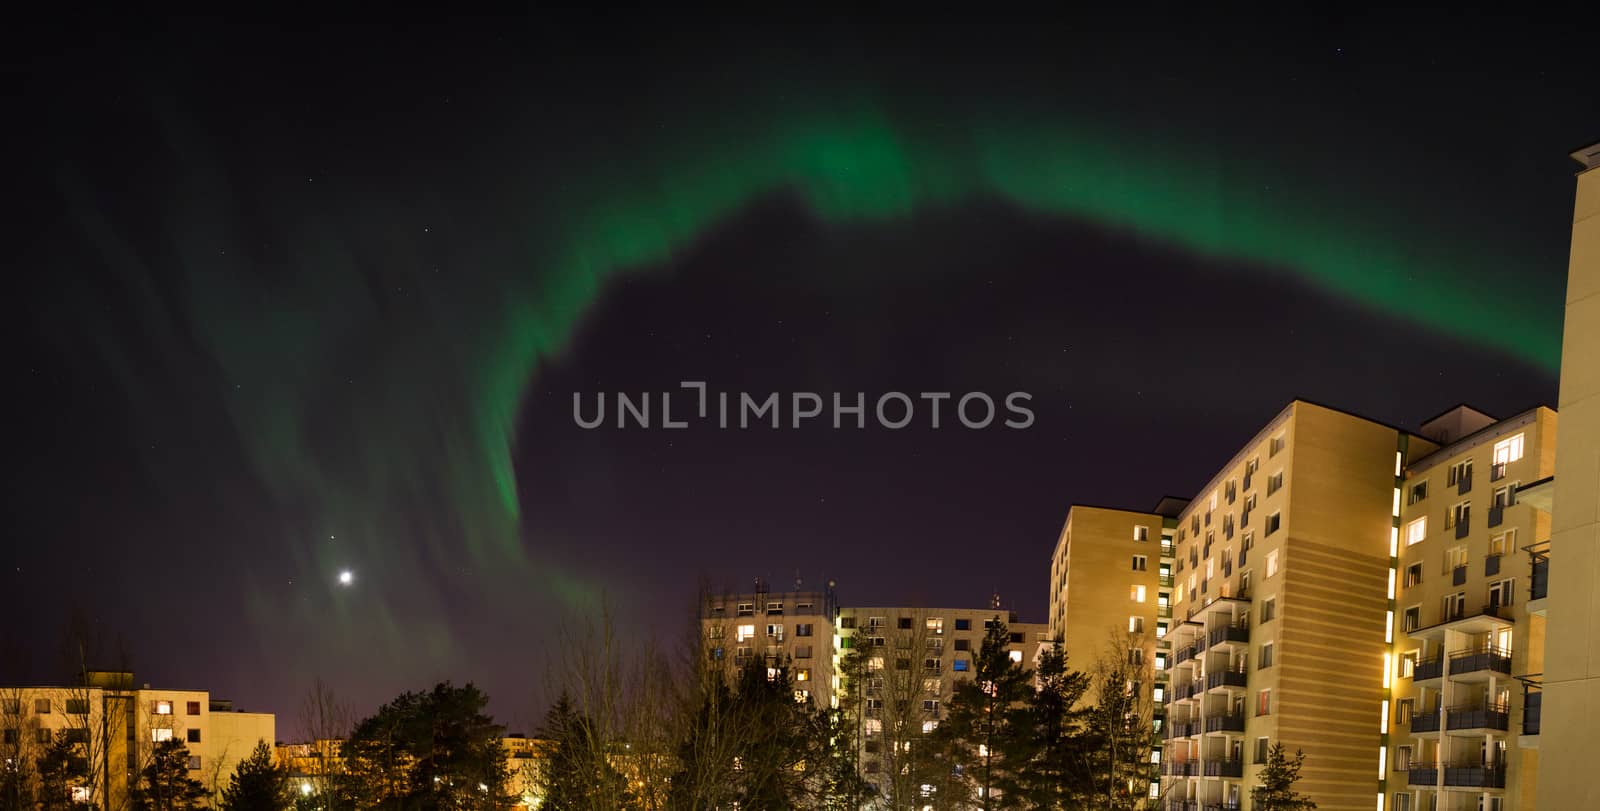 Green aurora borealis over city buildings